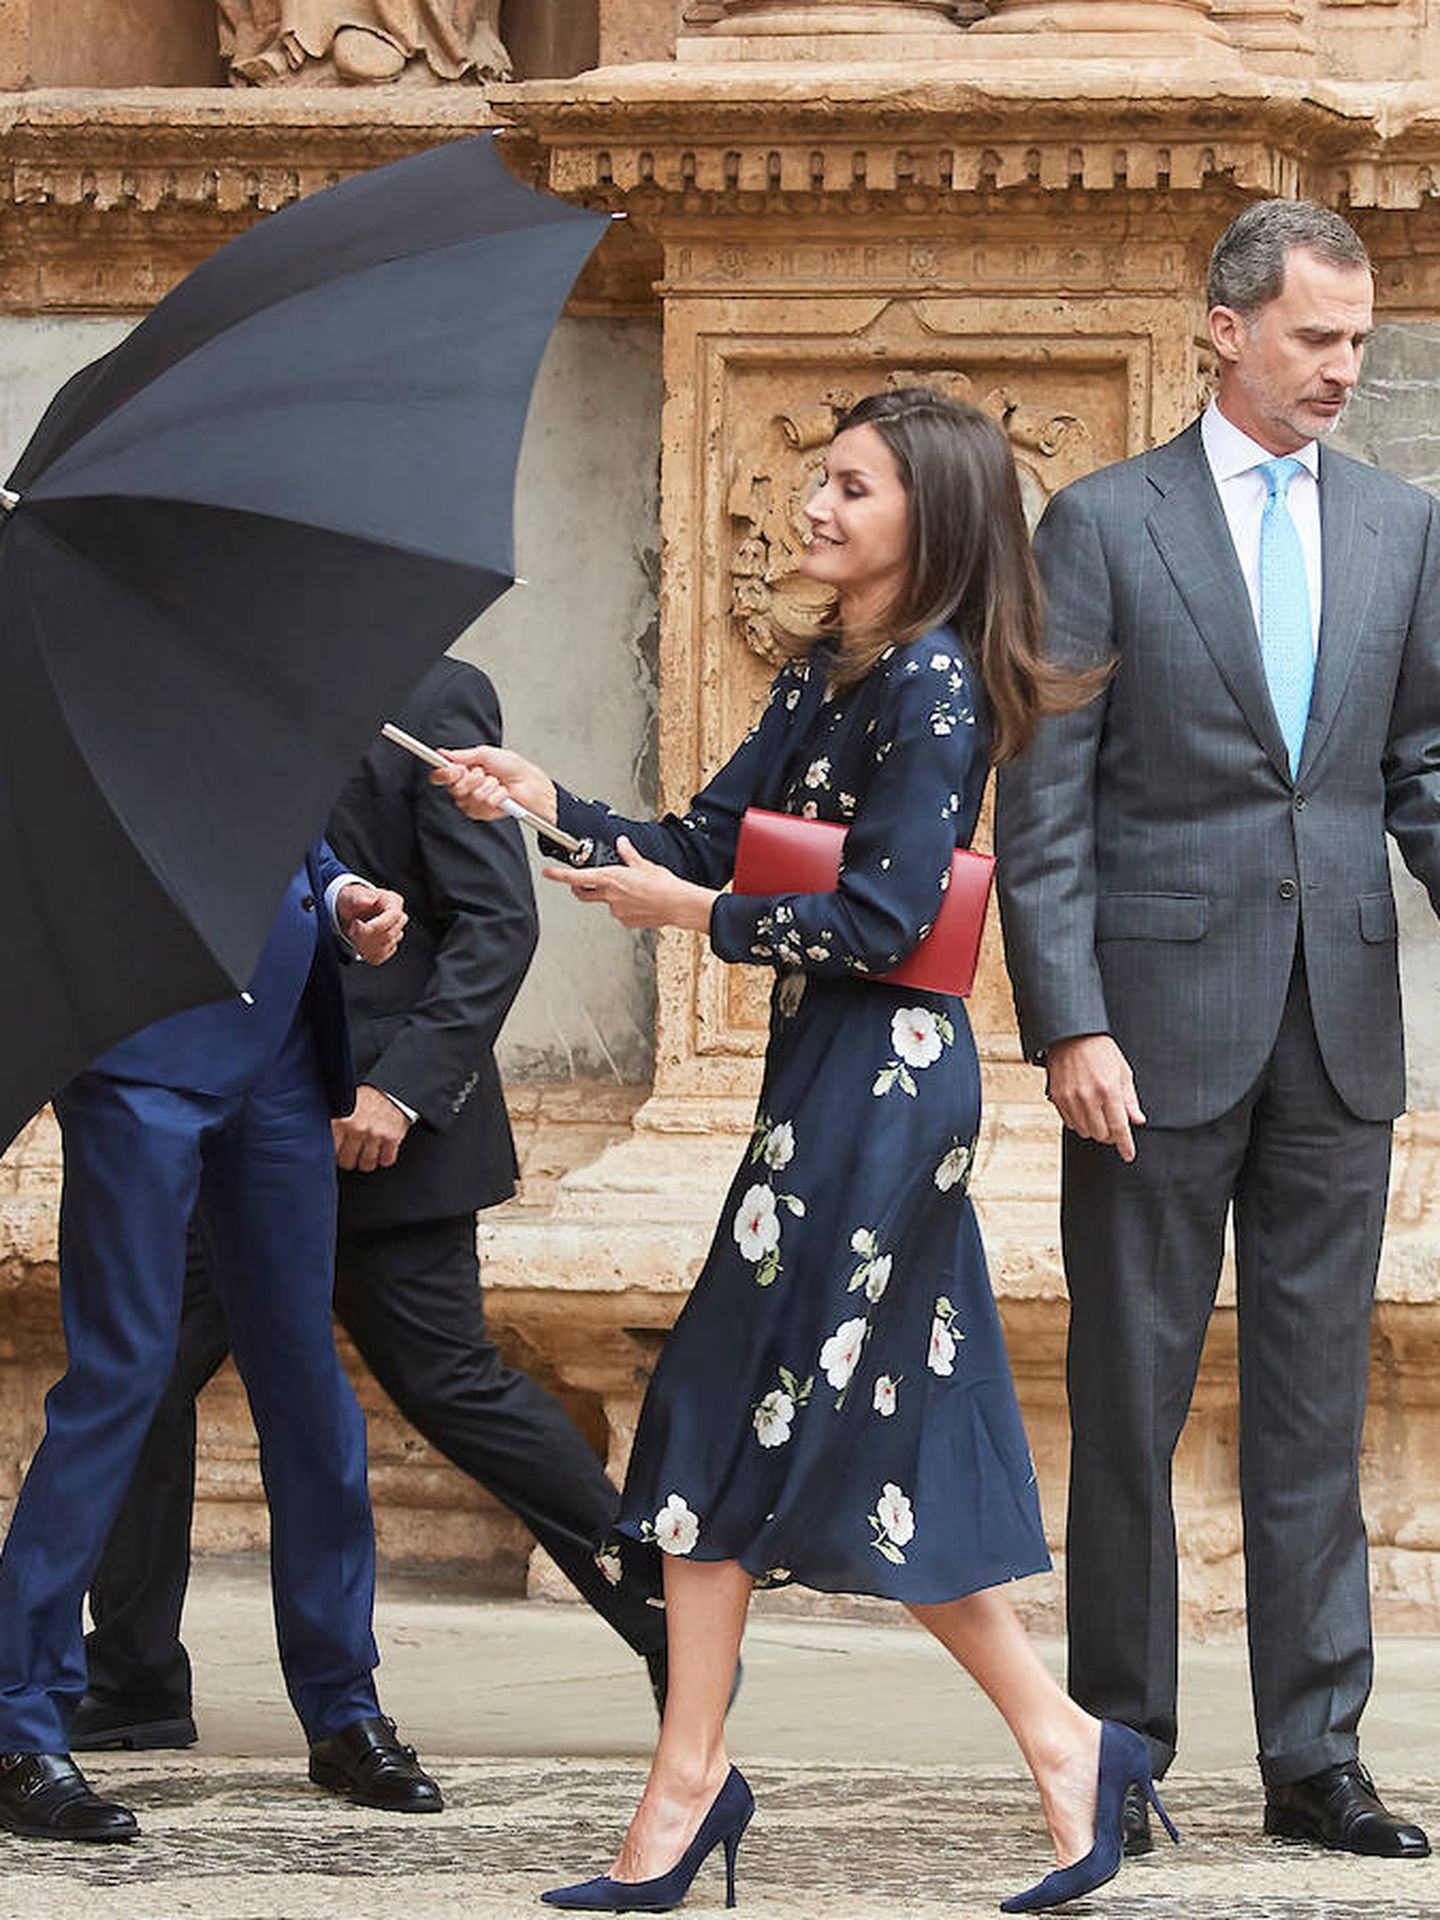 La Reina abre el paraguas para resguardarse de la lluvia. (Limited Pictures)